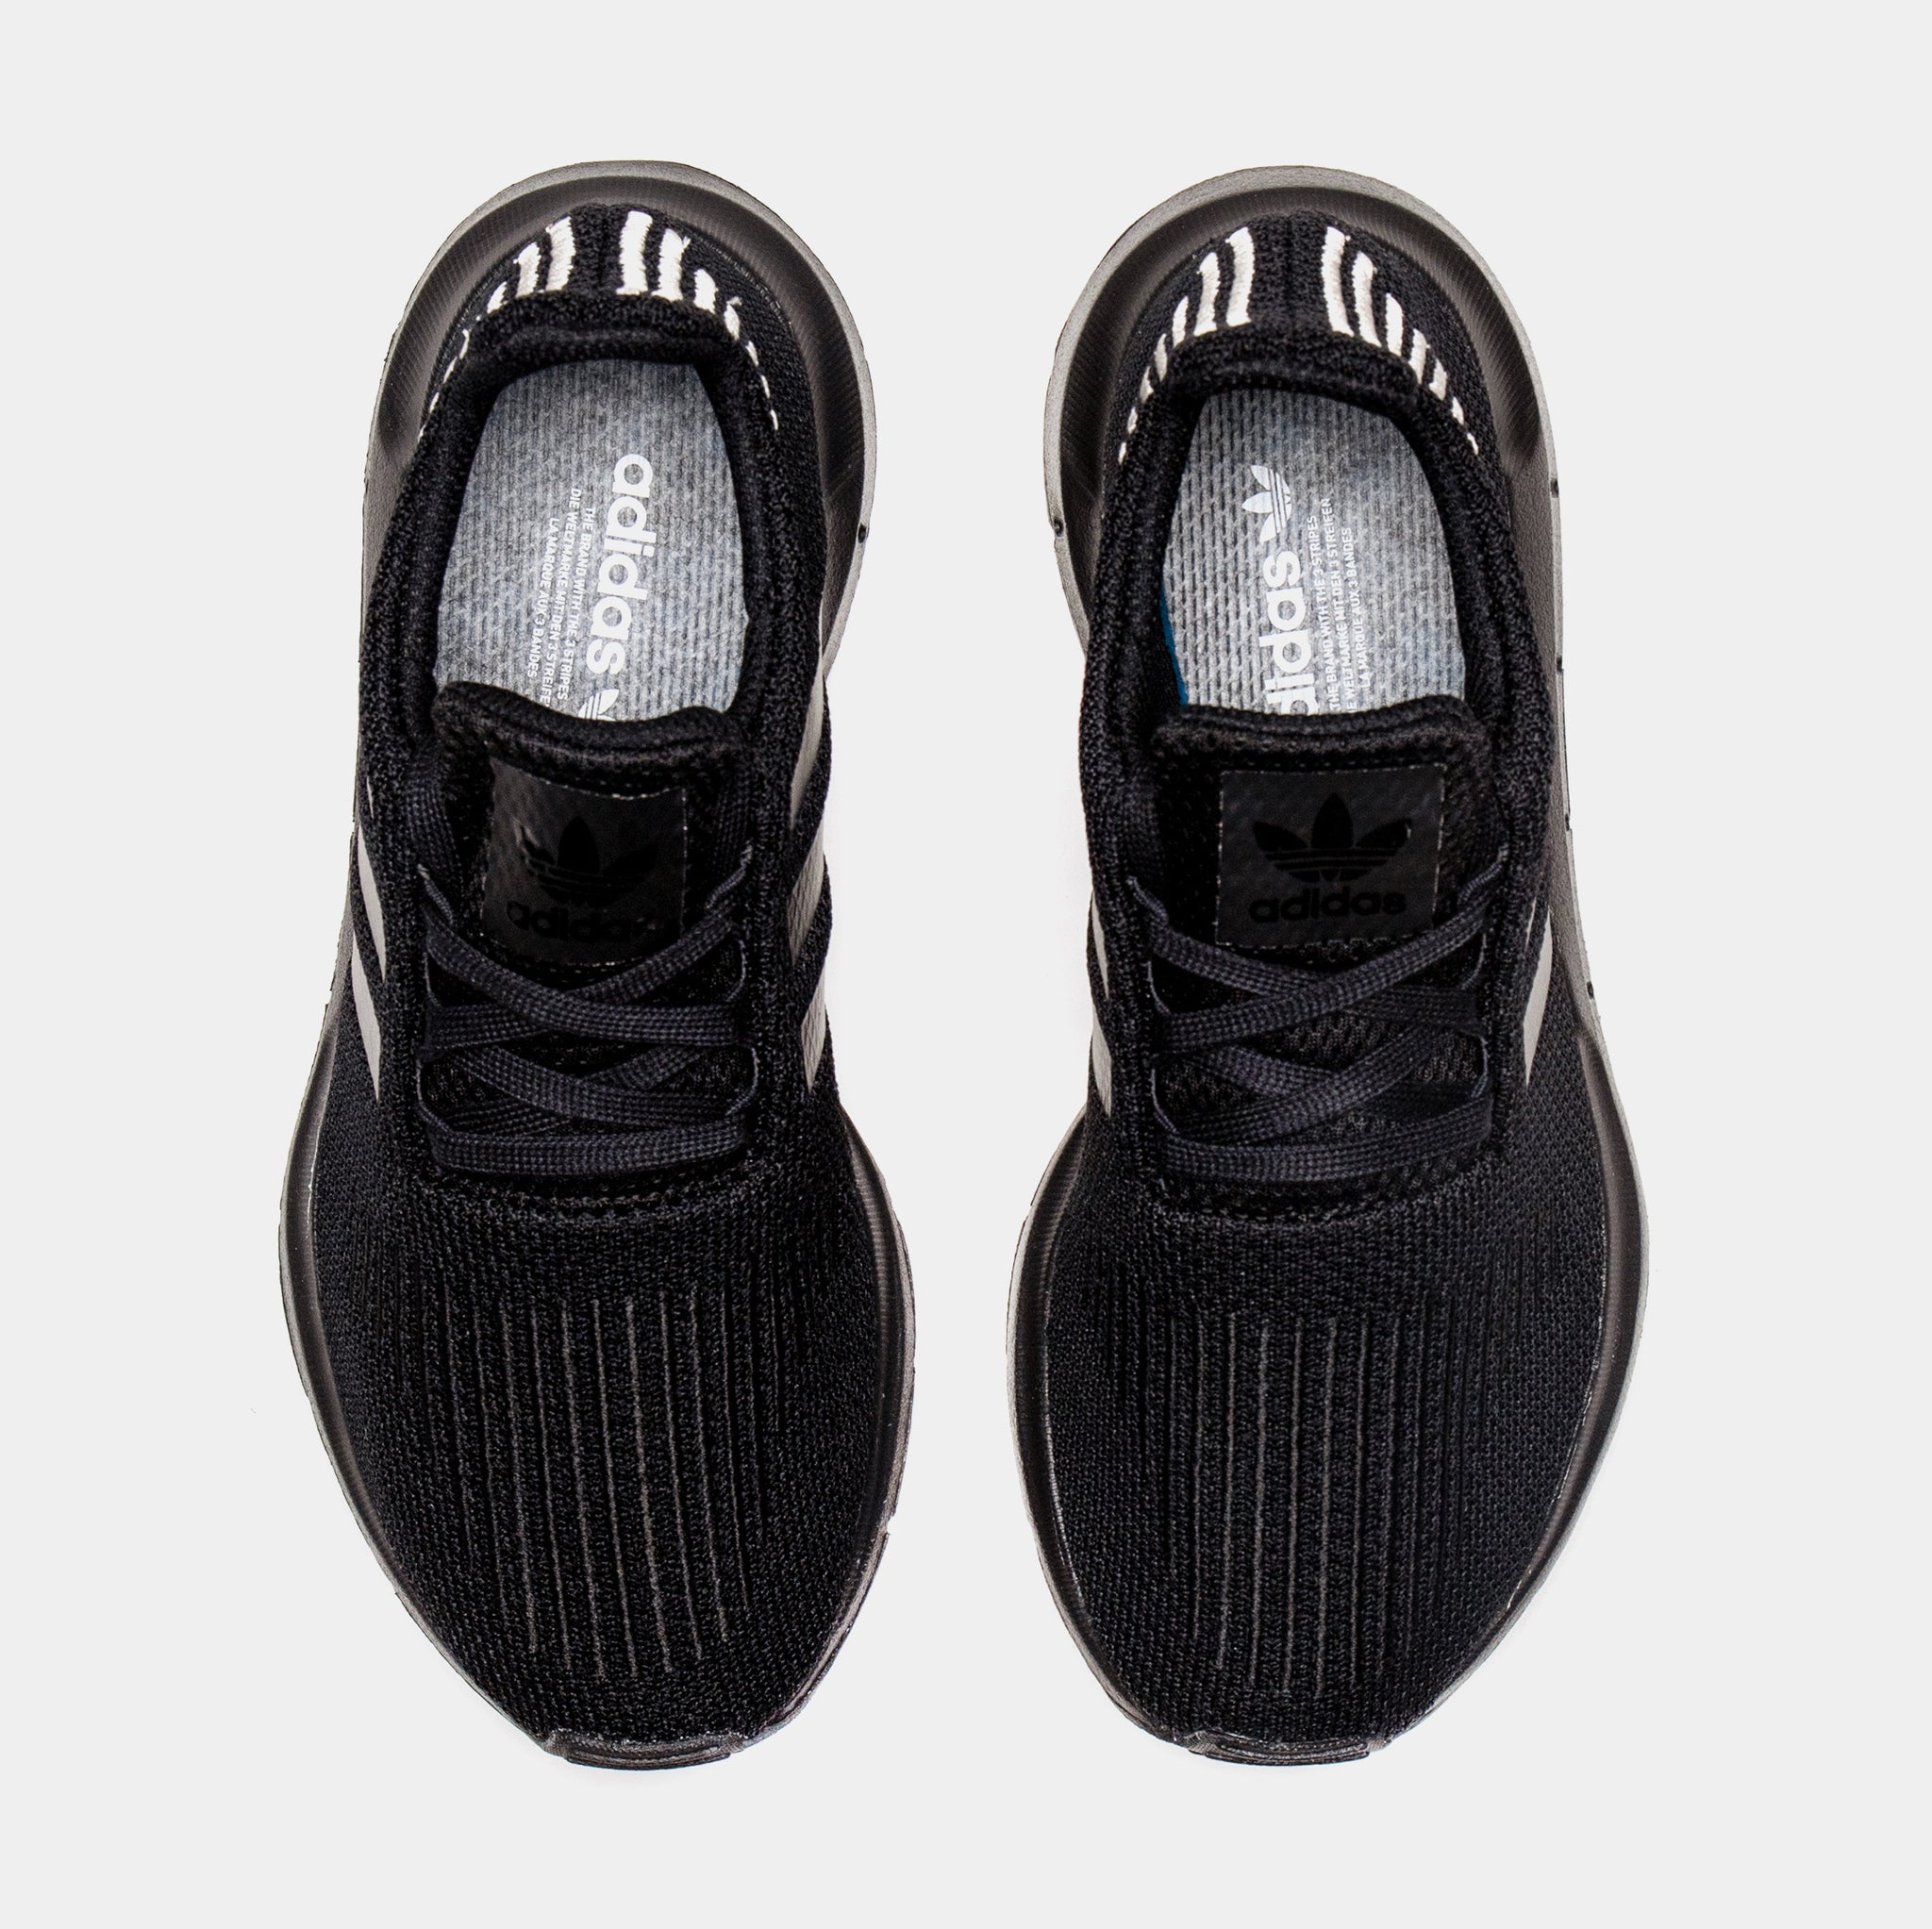 Adidas Adi 2000 Shoes Originals Sneakers Core Black/Utility Black GX4634 US  4-12 | eBay